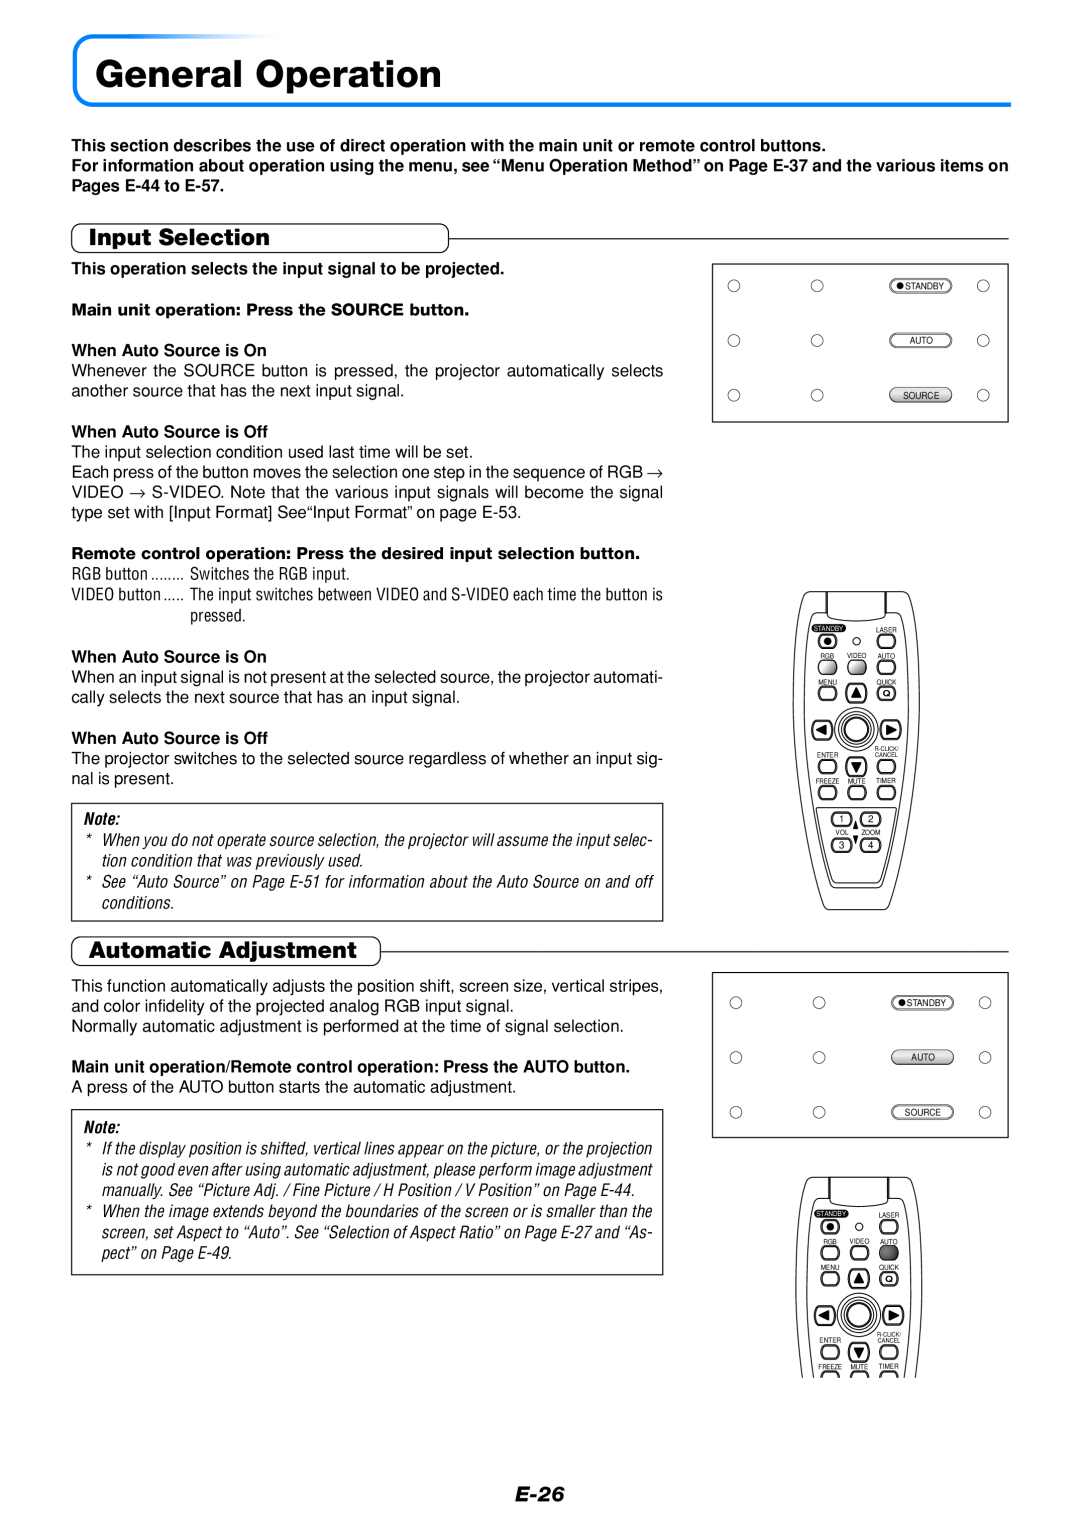 Mitsubishi Electronics DATA PROJECTOR user manual General Operation, Input Selection, Automatic Adjustment, E-26 